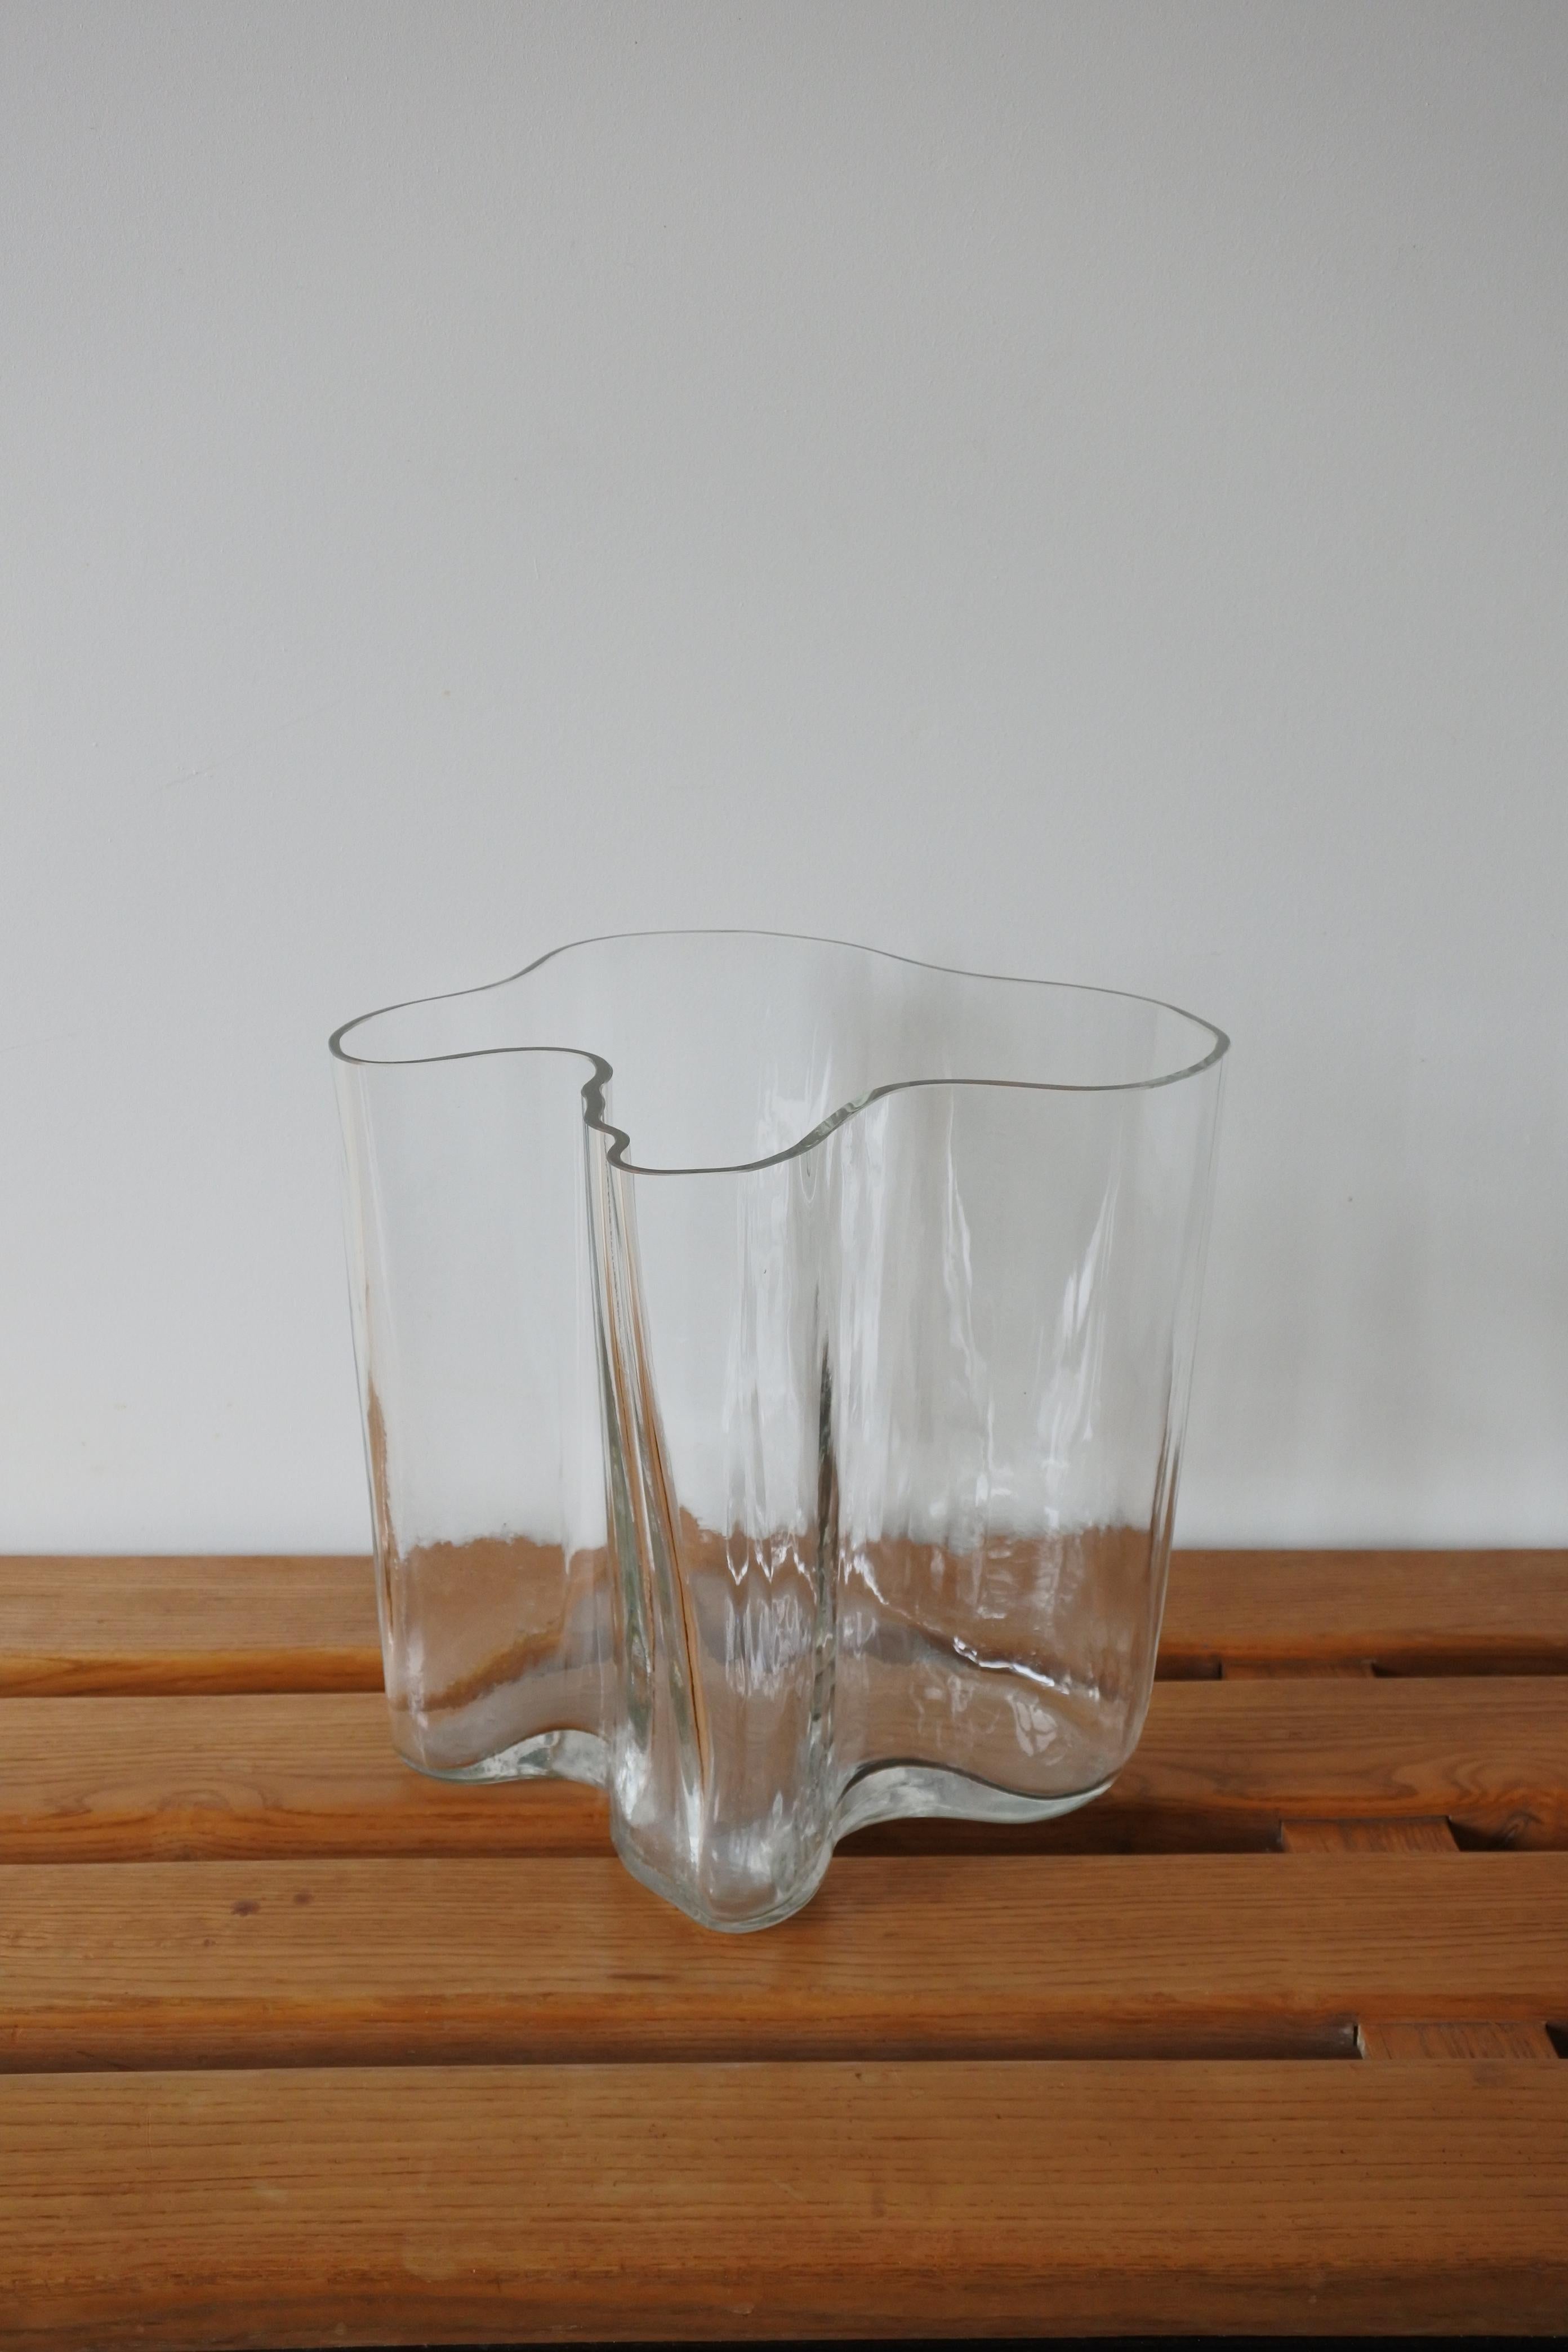 Blown Glass Large Vase Model 3031 “Savoy” Designed by Alvar Aalto for Iittala, Finland, 1956